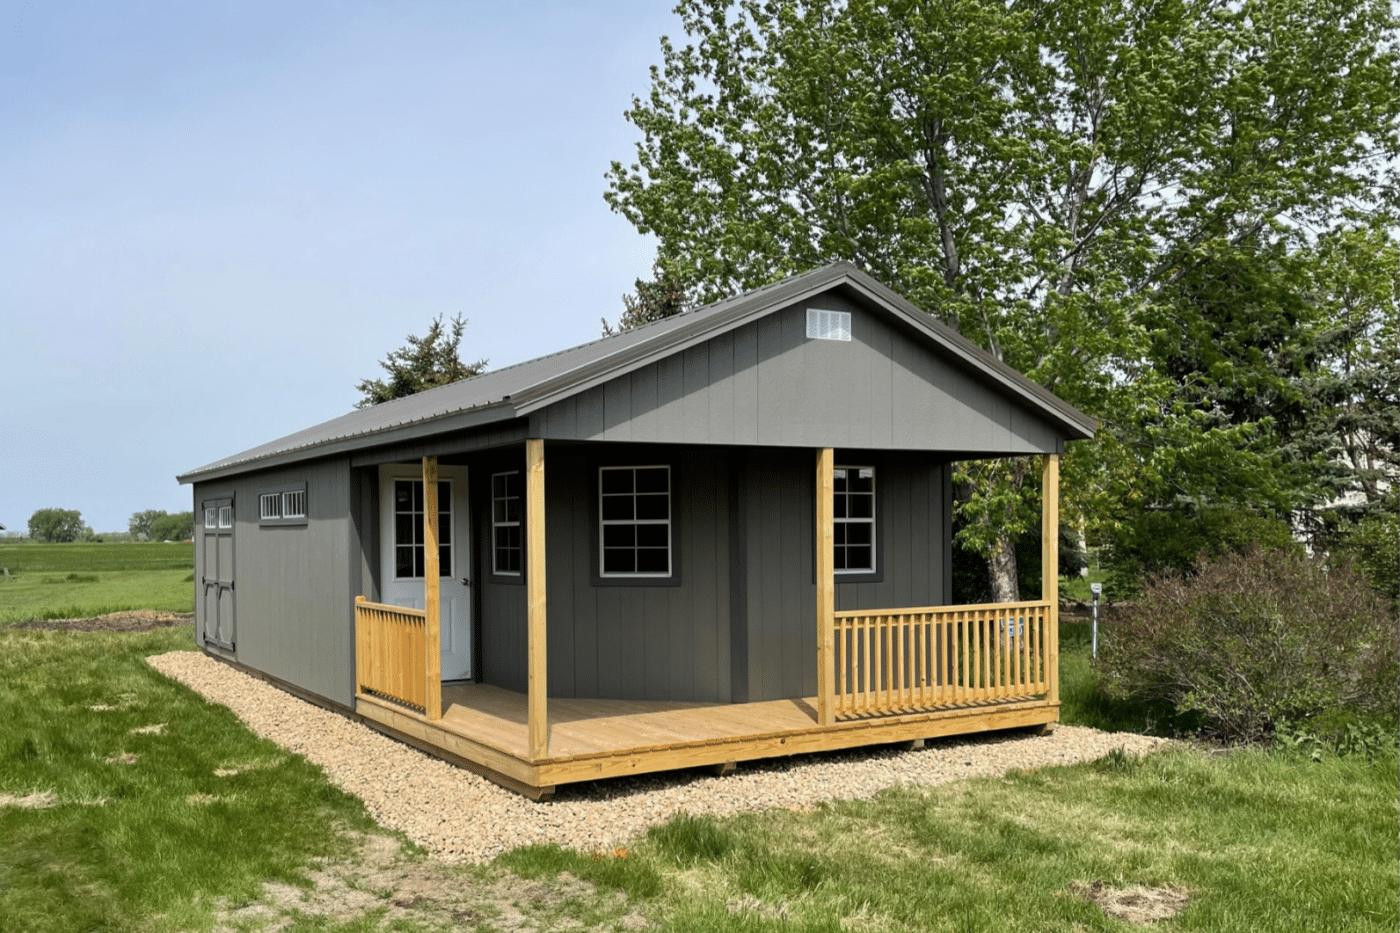 Gray a-frame cabin shed in backyard